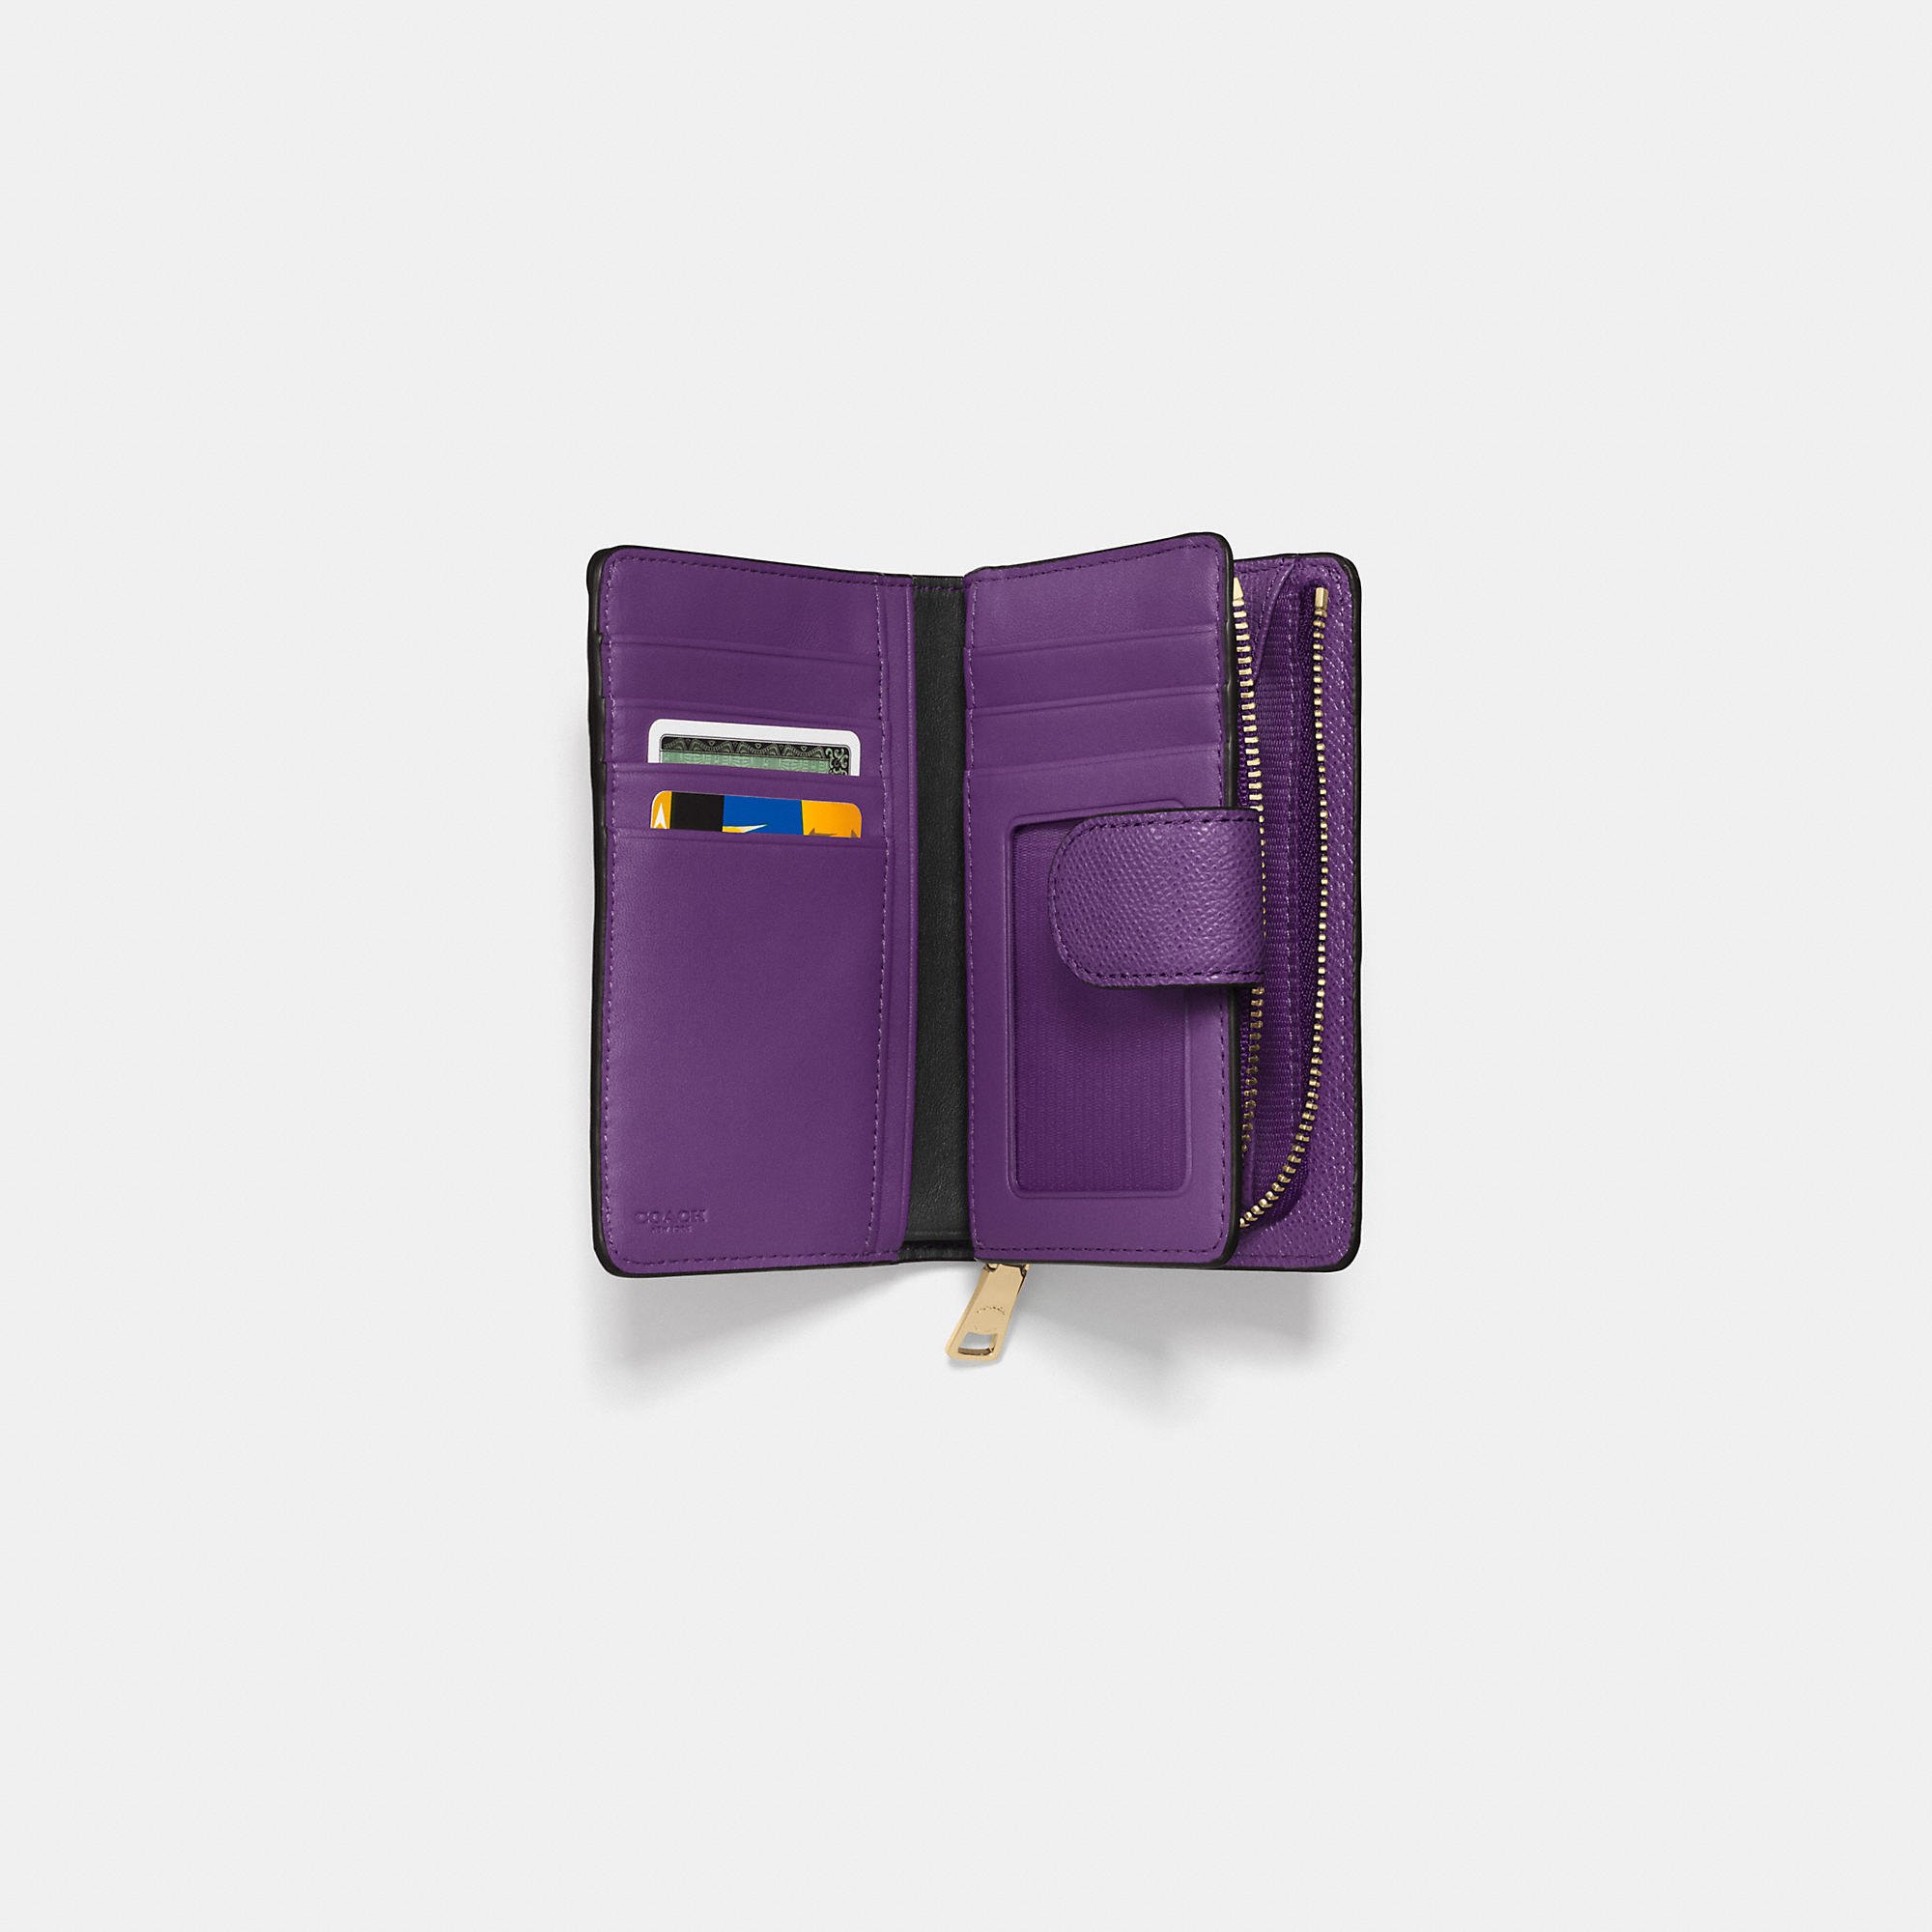 COACH Medium Zip Around Wallet In Crossgrain Leather in Light Gold/Violet (Purple) - Lyst